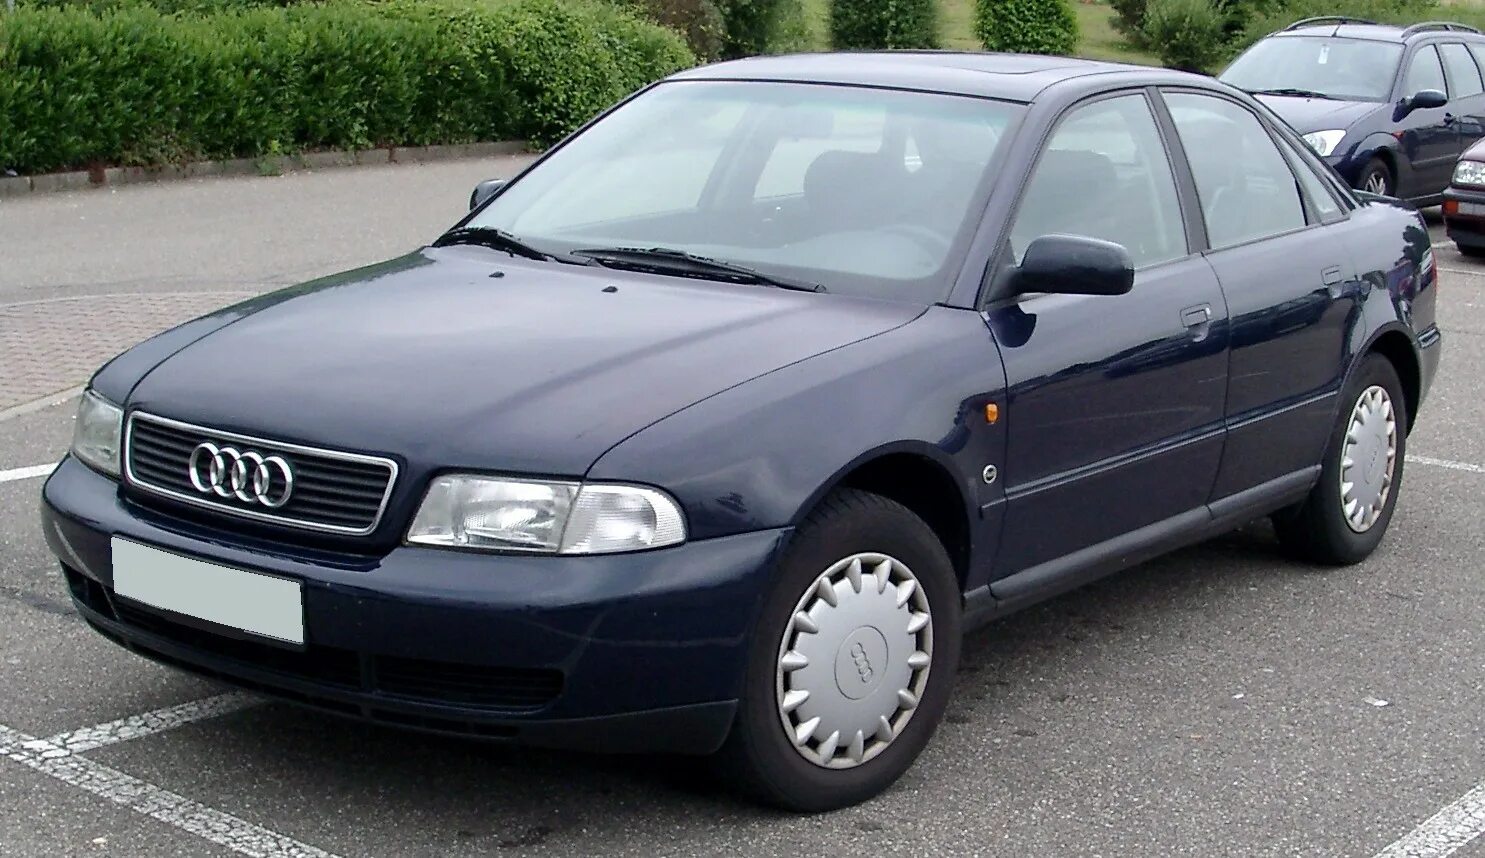 Audi a4 b5 1996. Audi a4 b5 2000. Ауди а4 б5 1996. Audi a4 b5 1995. Купить ауди а4 в5